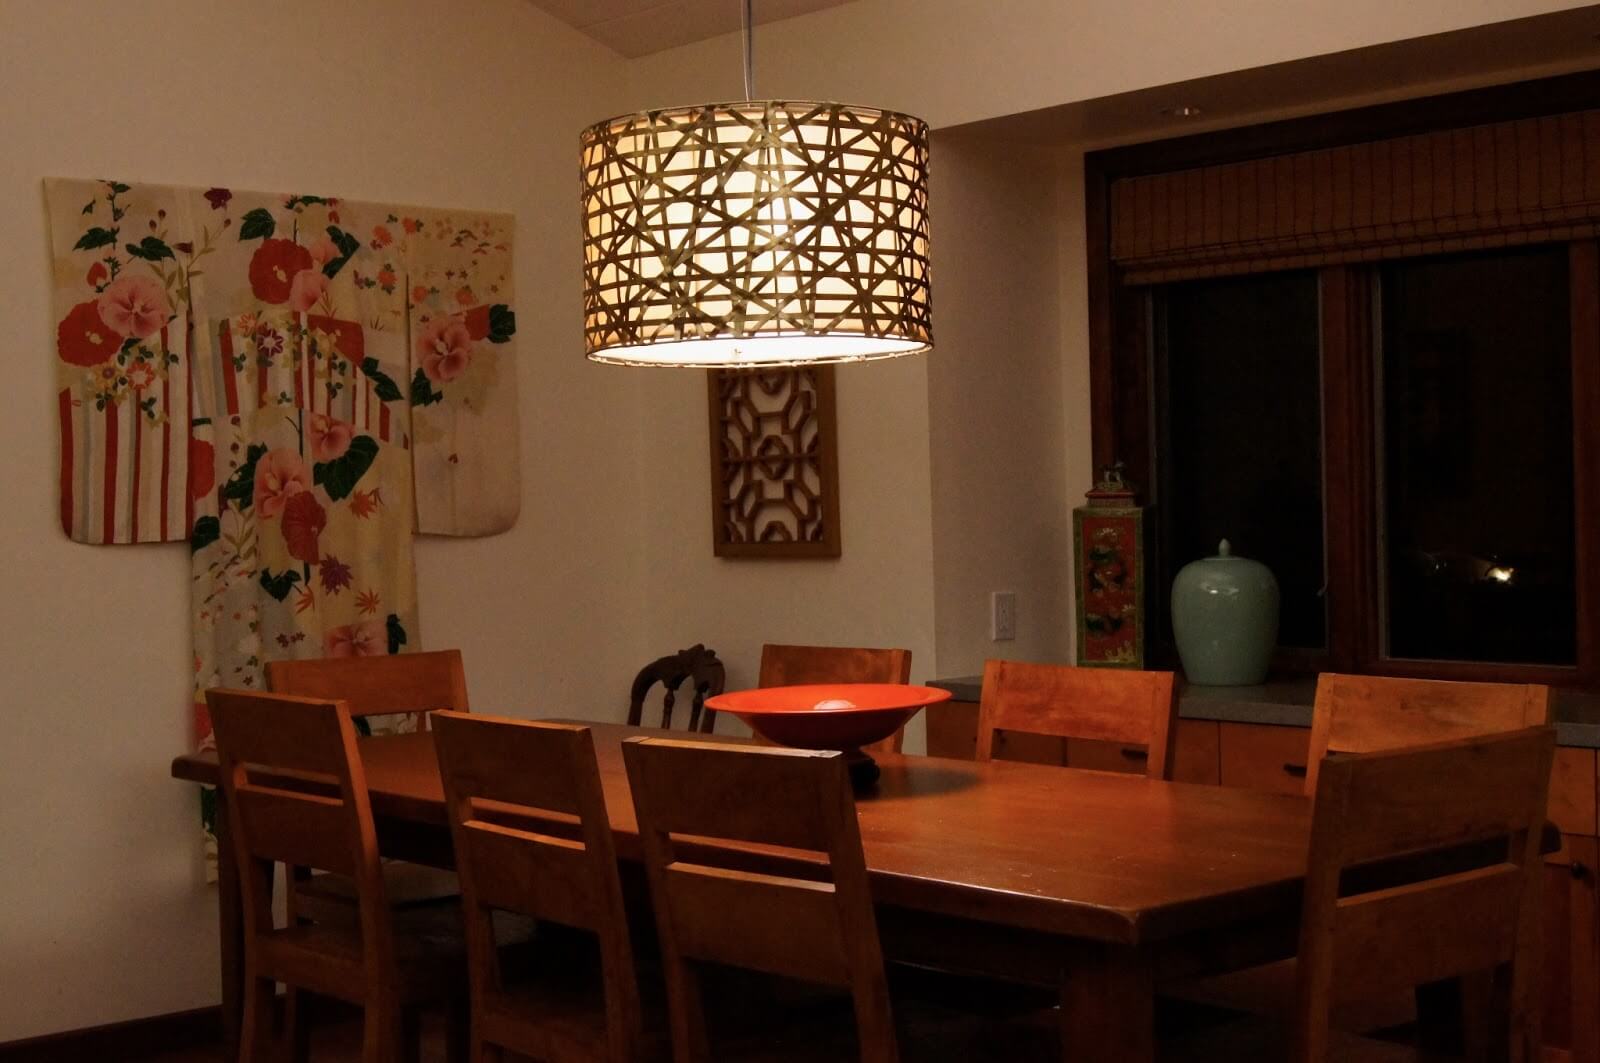 Dining Room Lighting Ideas